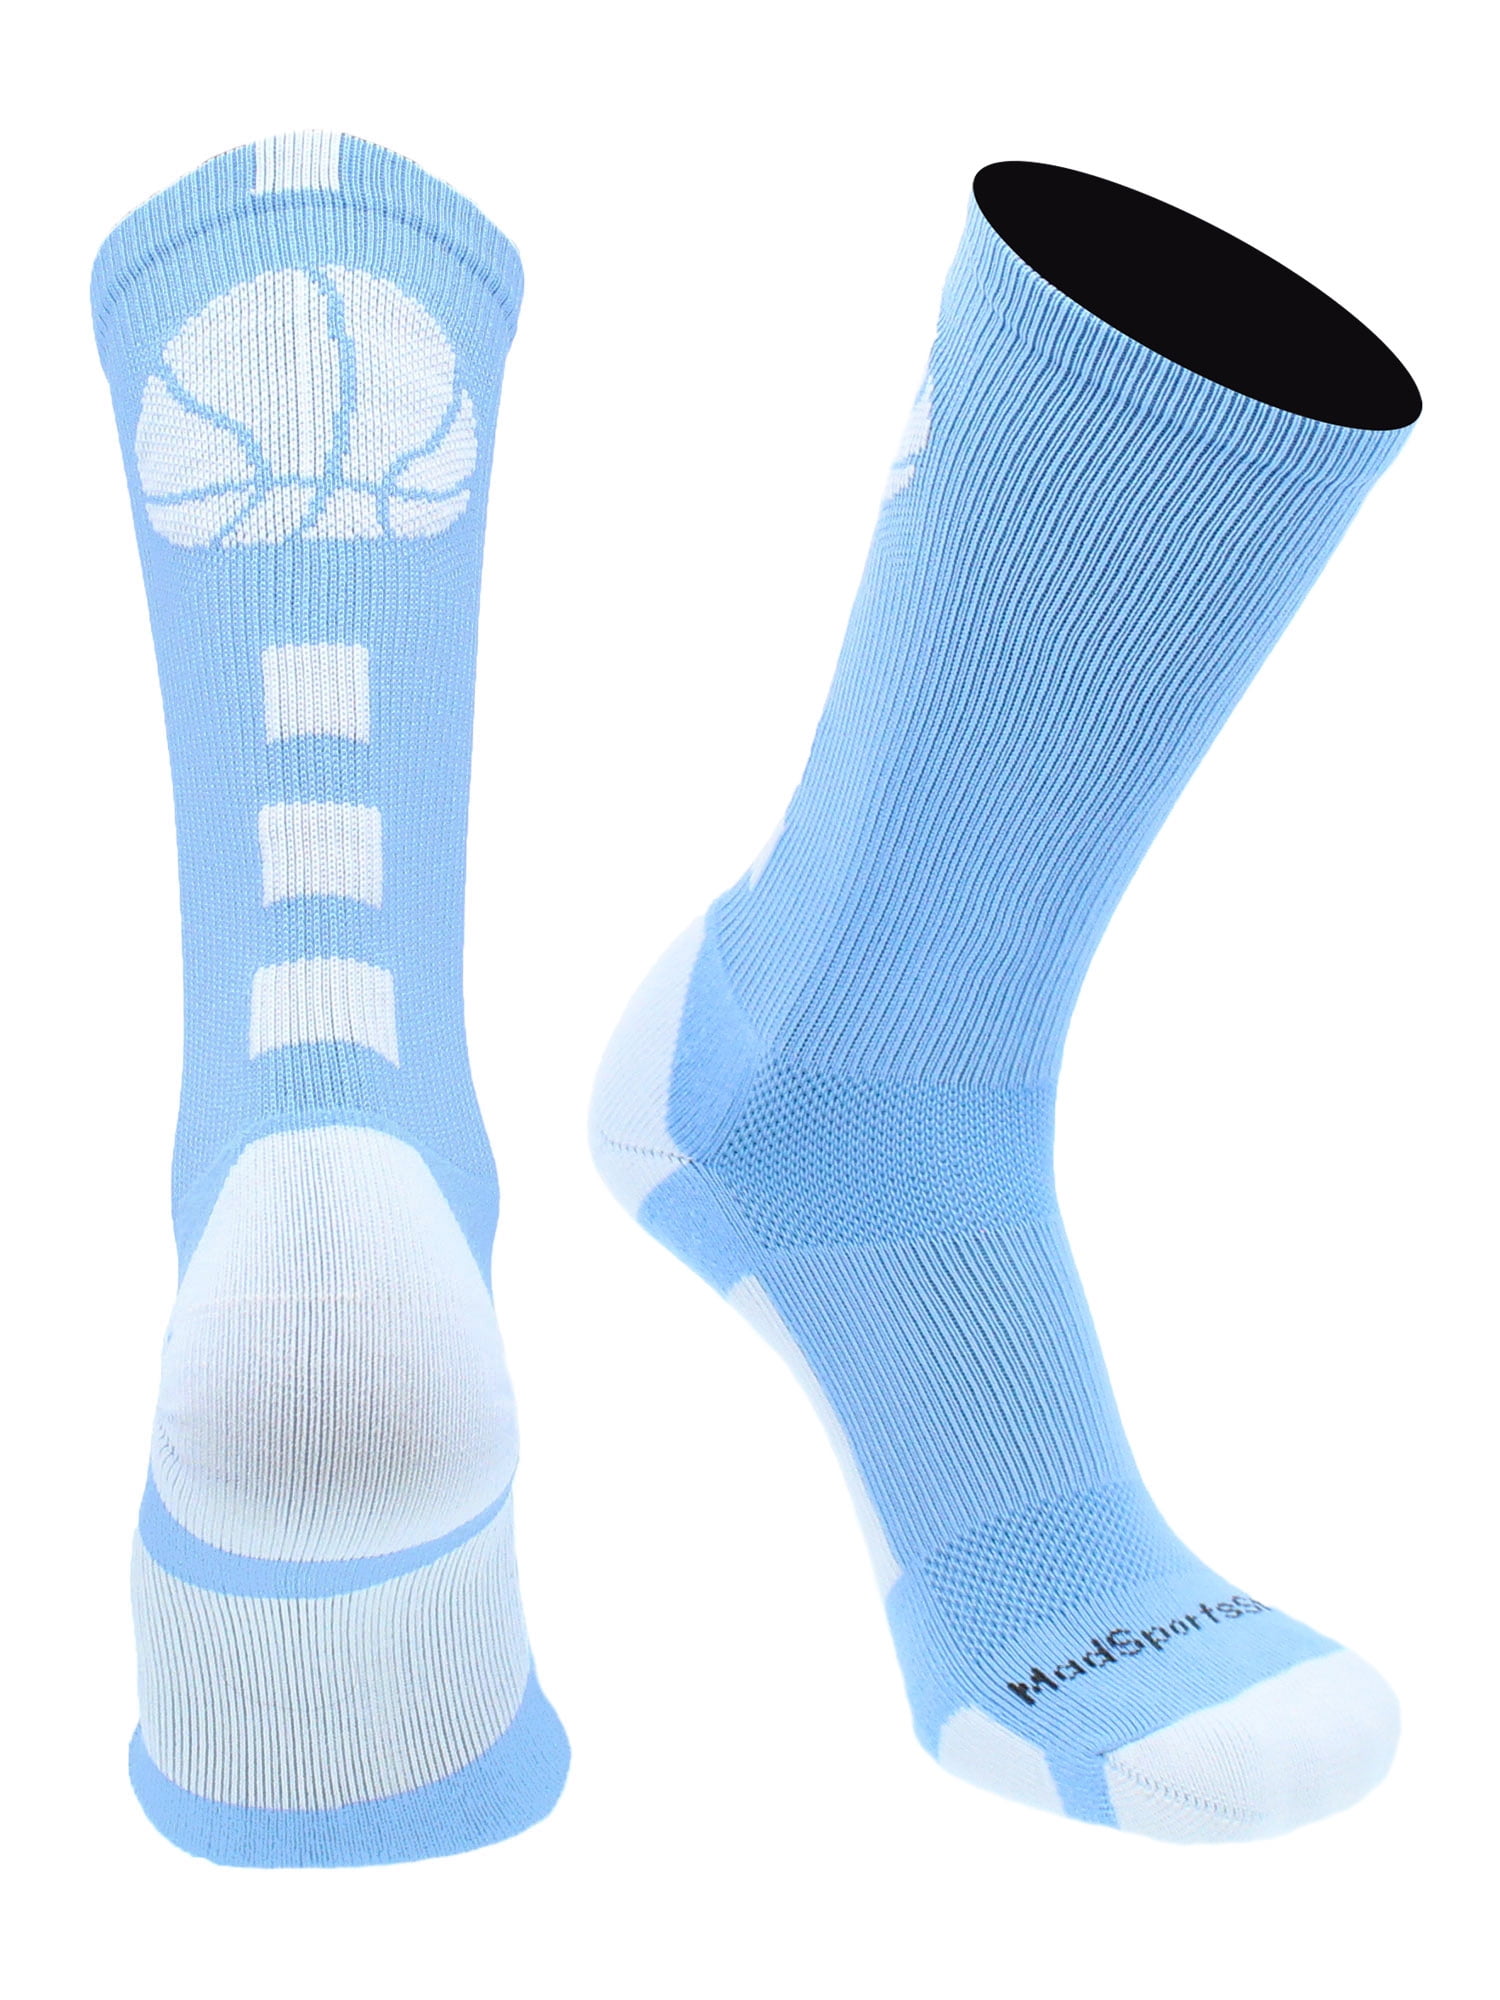 Basketball Socks with Basketball Crew (Columbia Blue/White, X-Large)